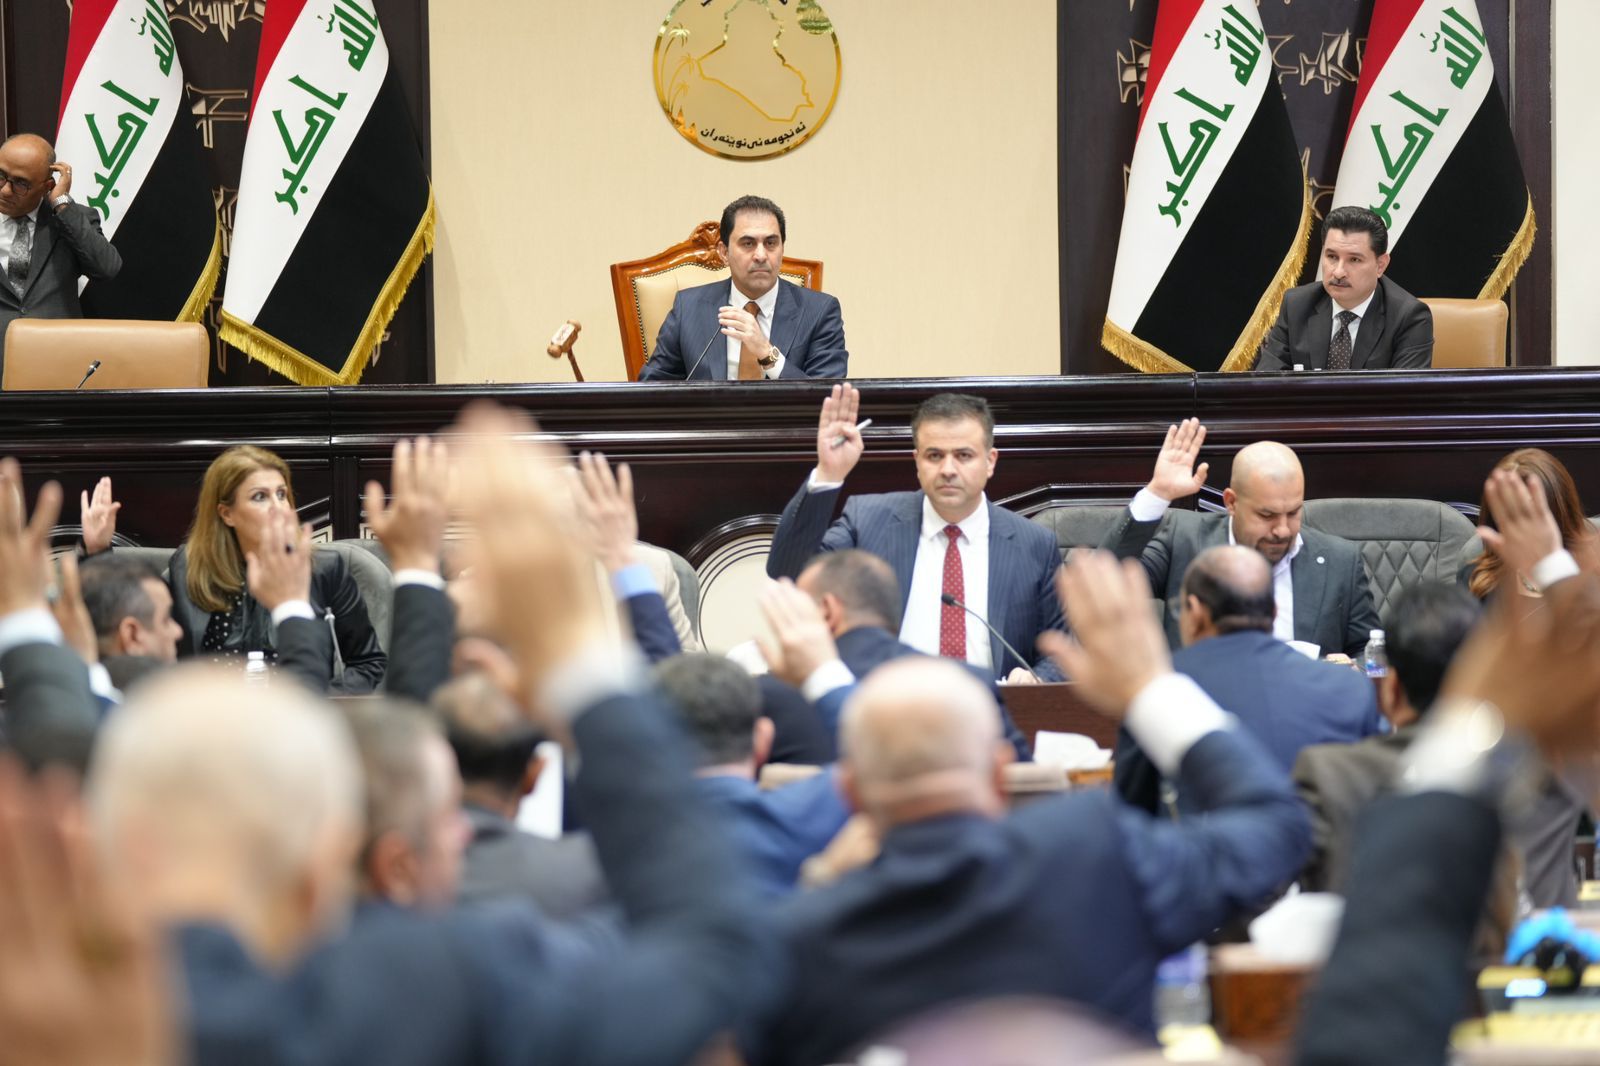 Iraqi parliament begins vote counting for a successor to al-Halboosi